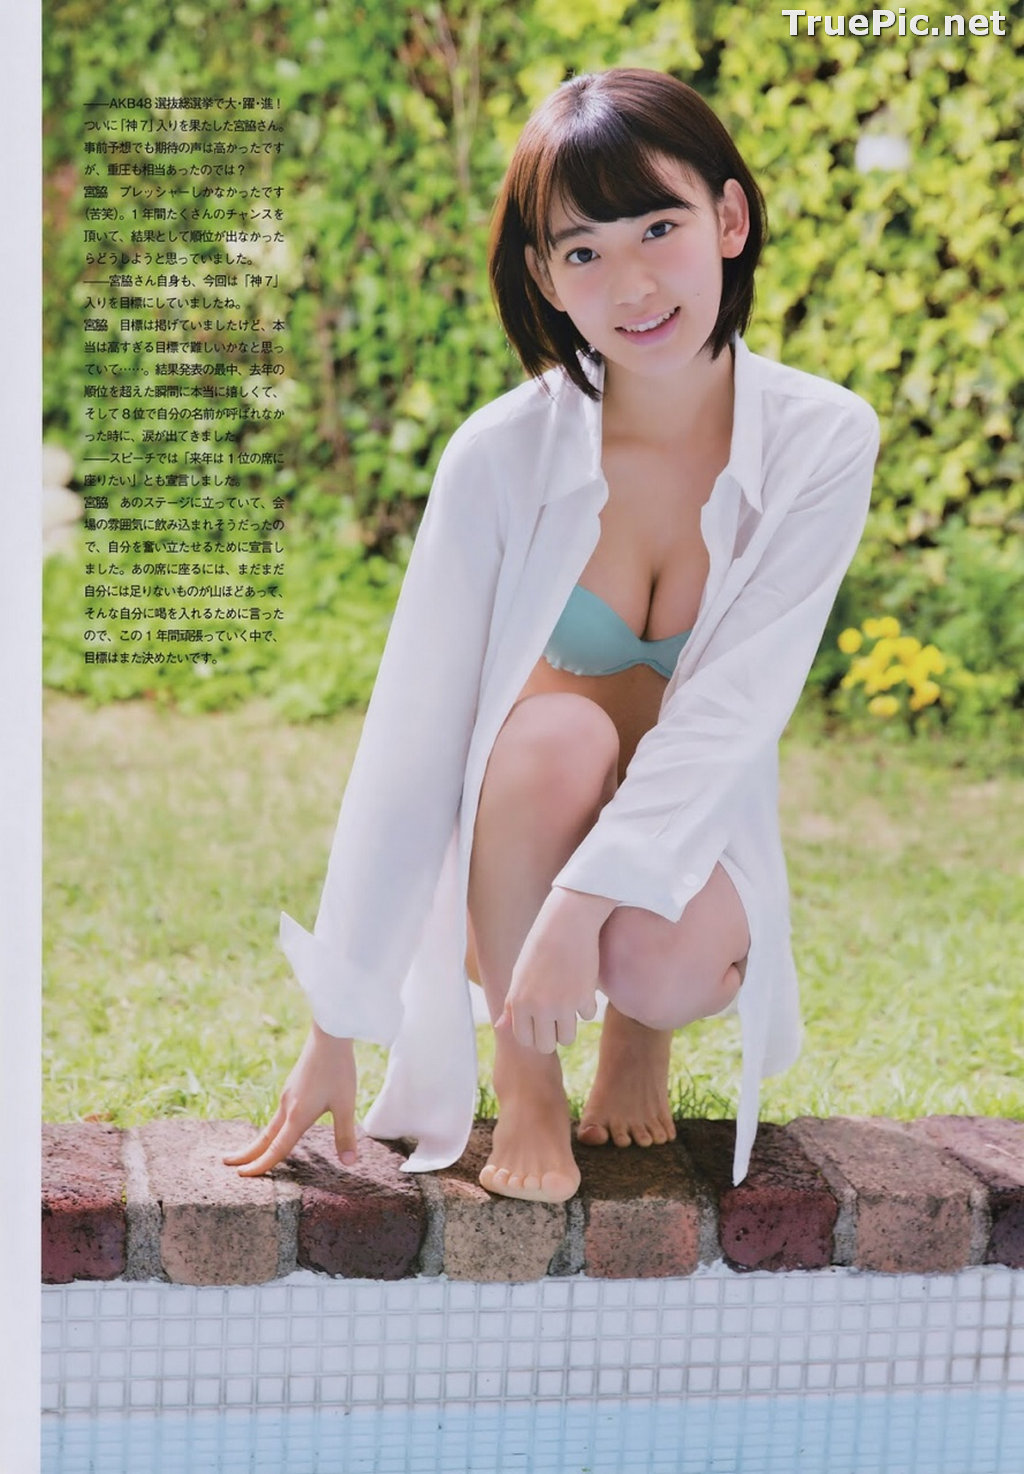 Image Japanese Singer and Actress - Sakura Miyawaki (宮脇咲良) - Sexy Picture Collection 2021 - TruePic.net - Picture-90